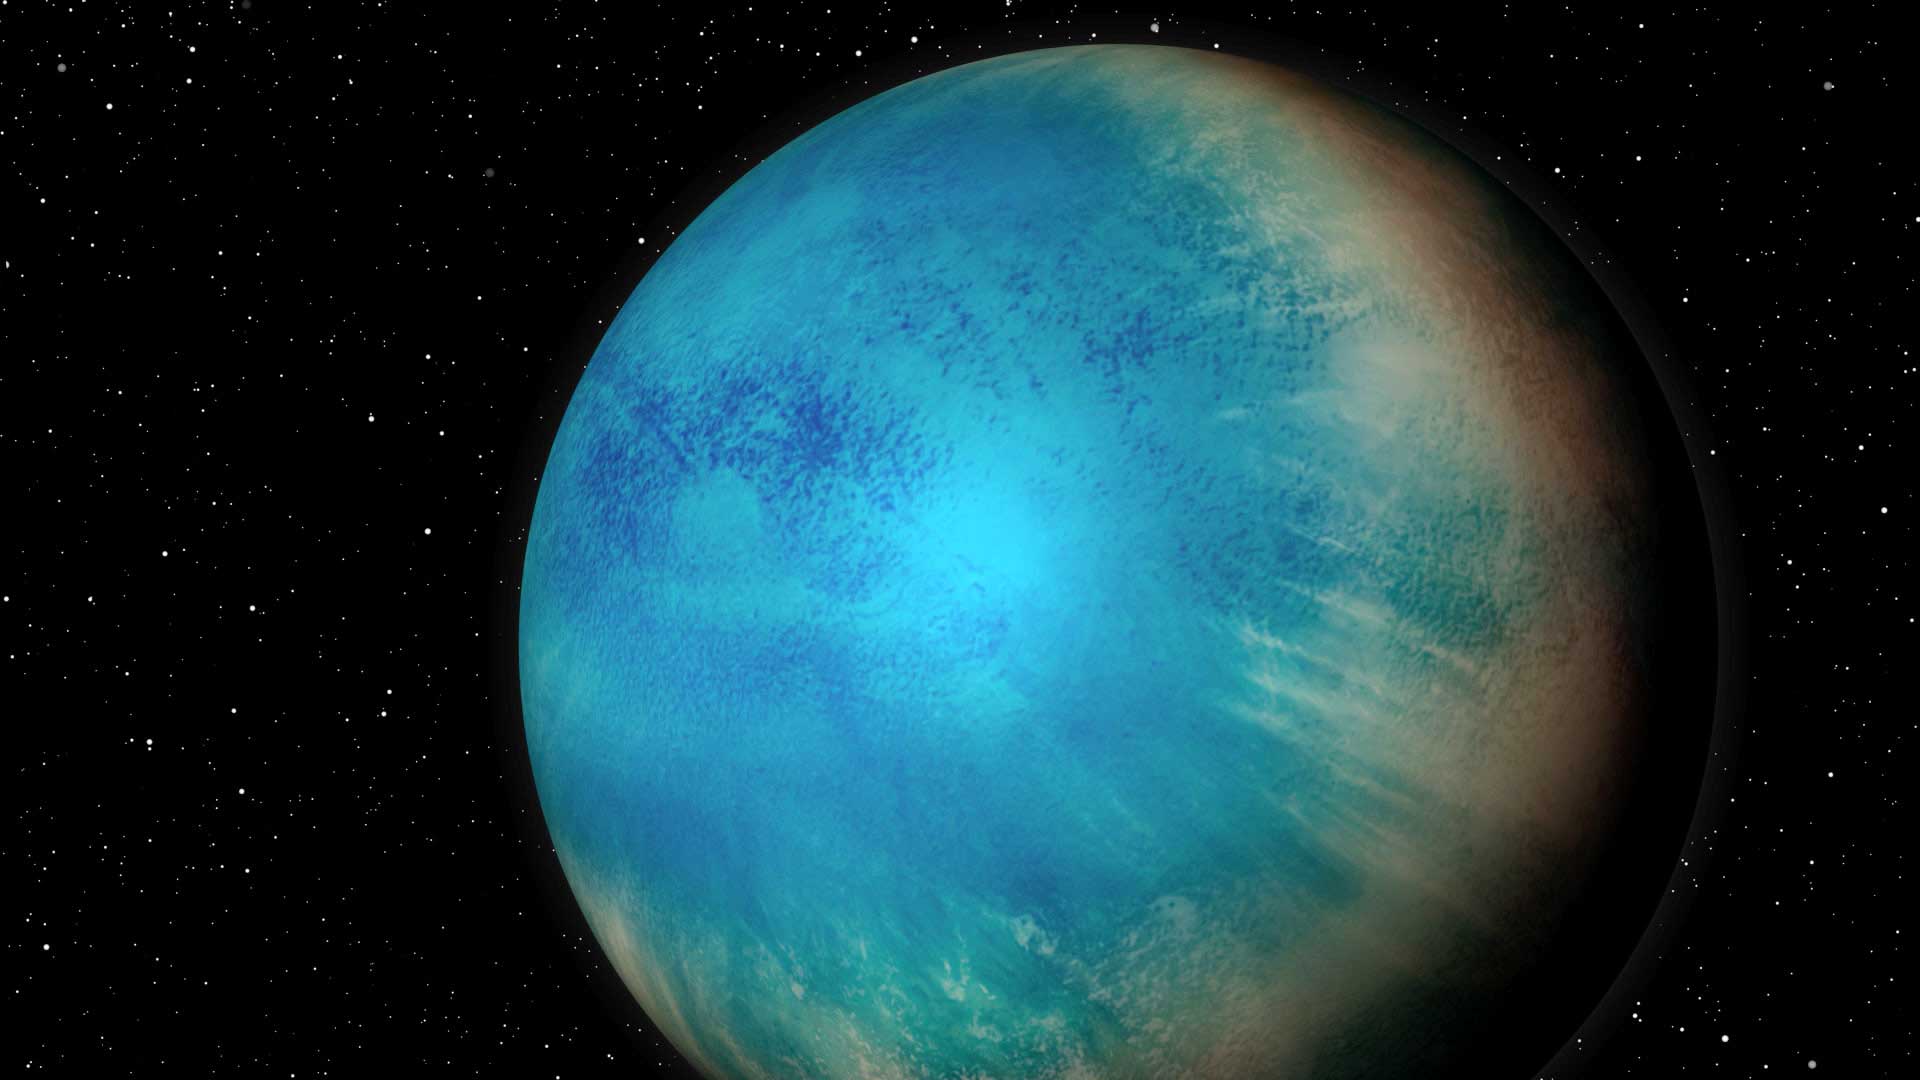 Exoplanet TOI-1452b